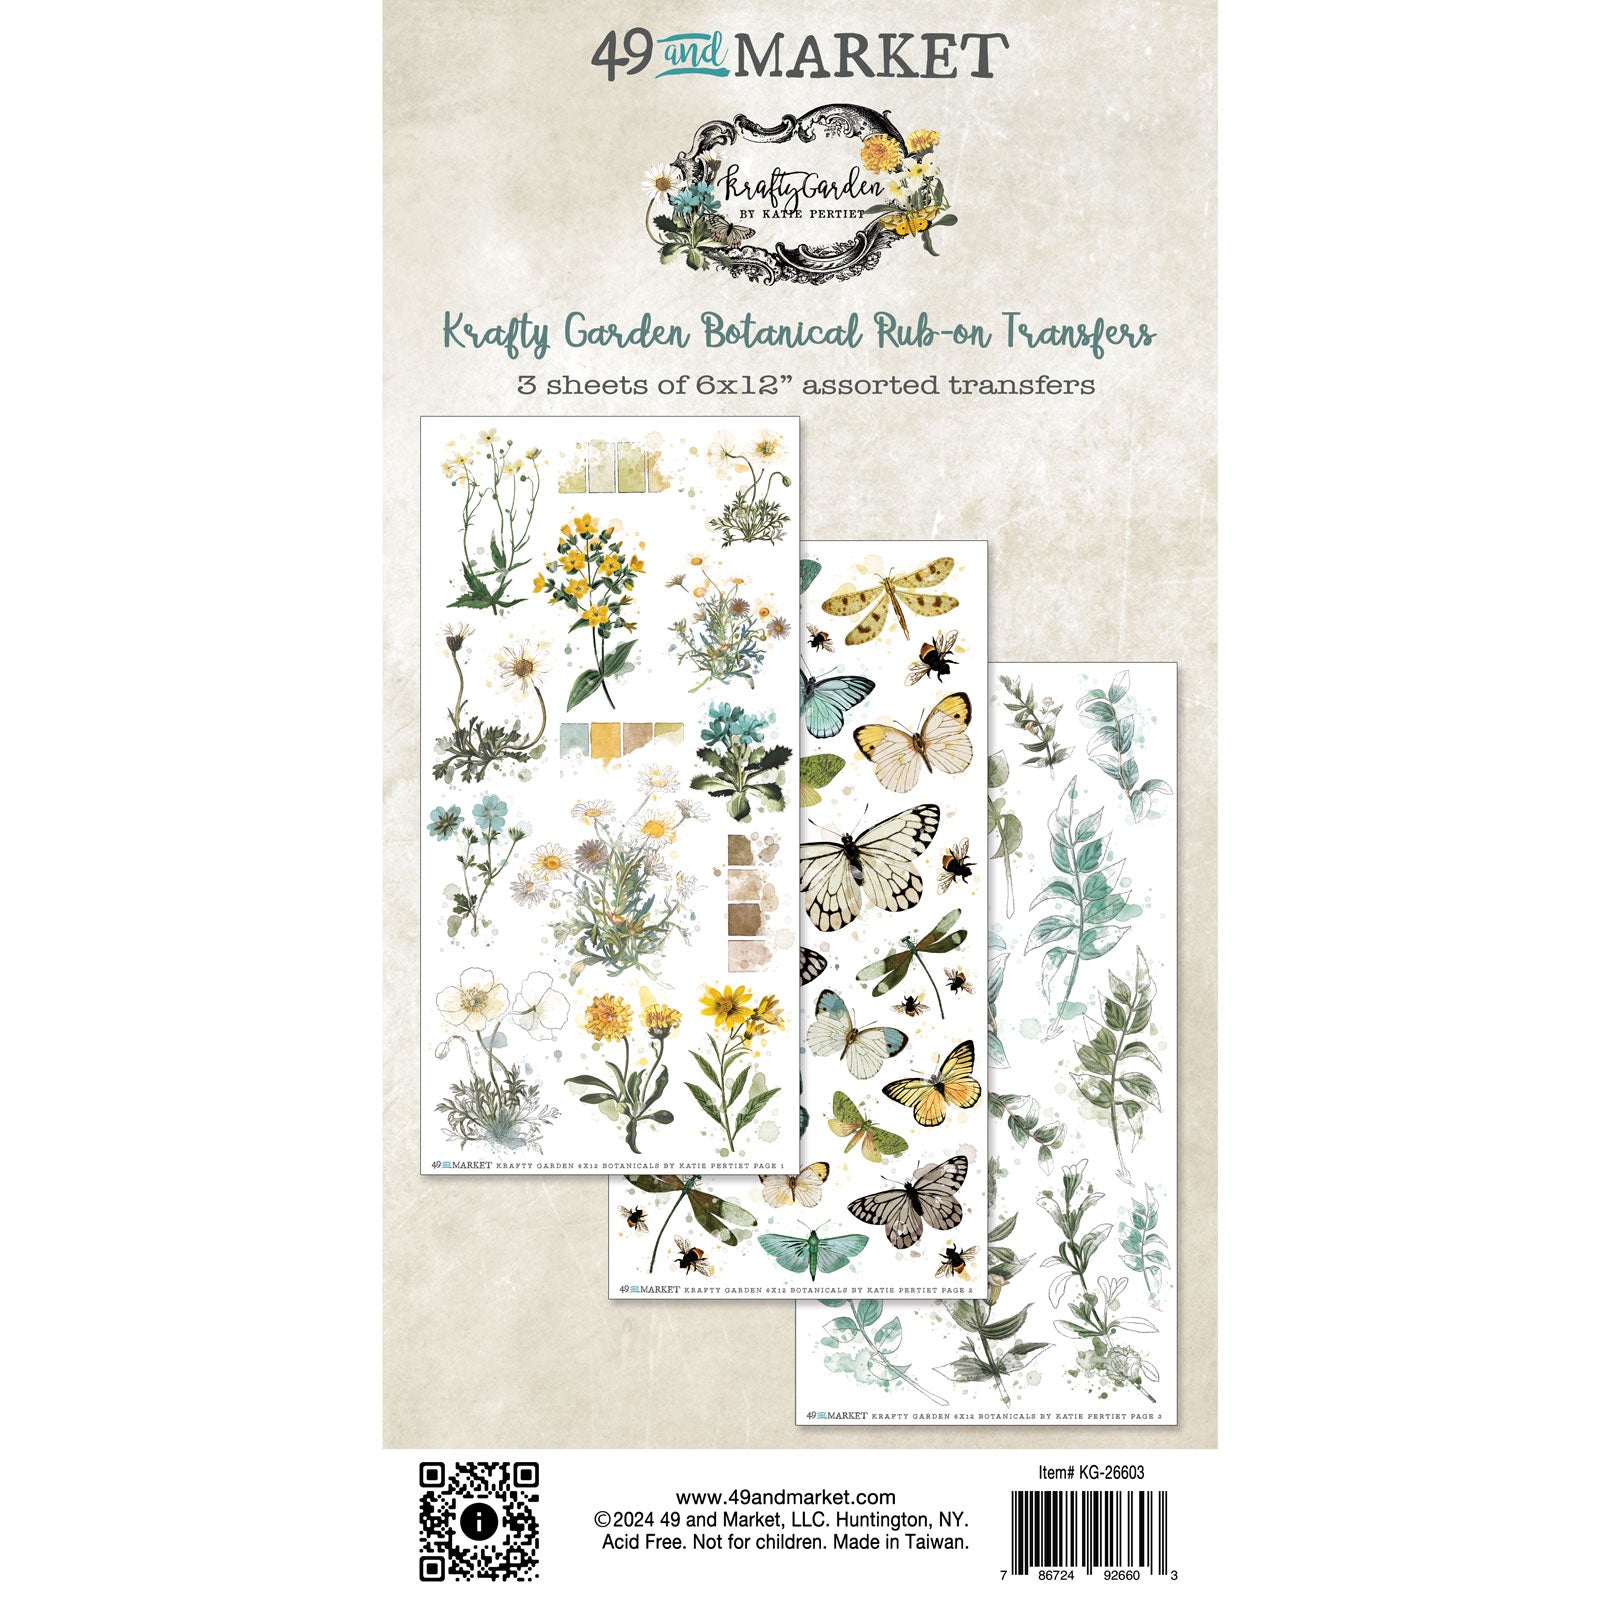 Copy of 49 & Market  - Kraft Garden Botanicals Rub on Transfers